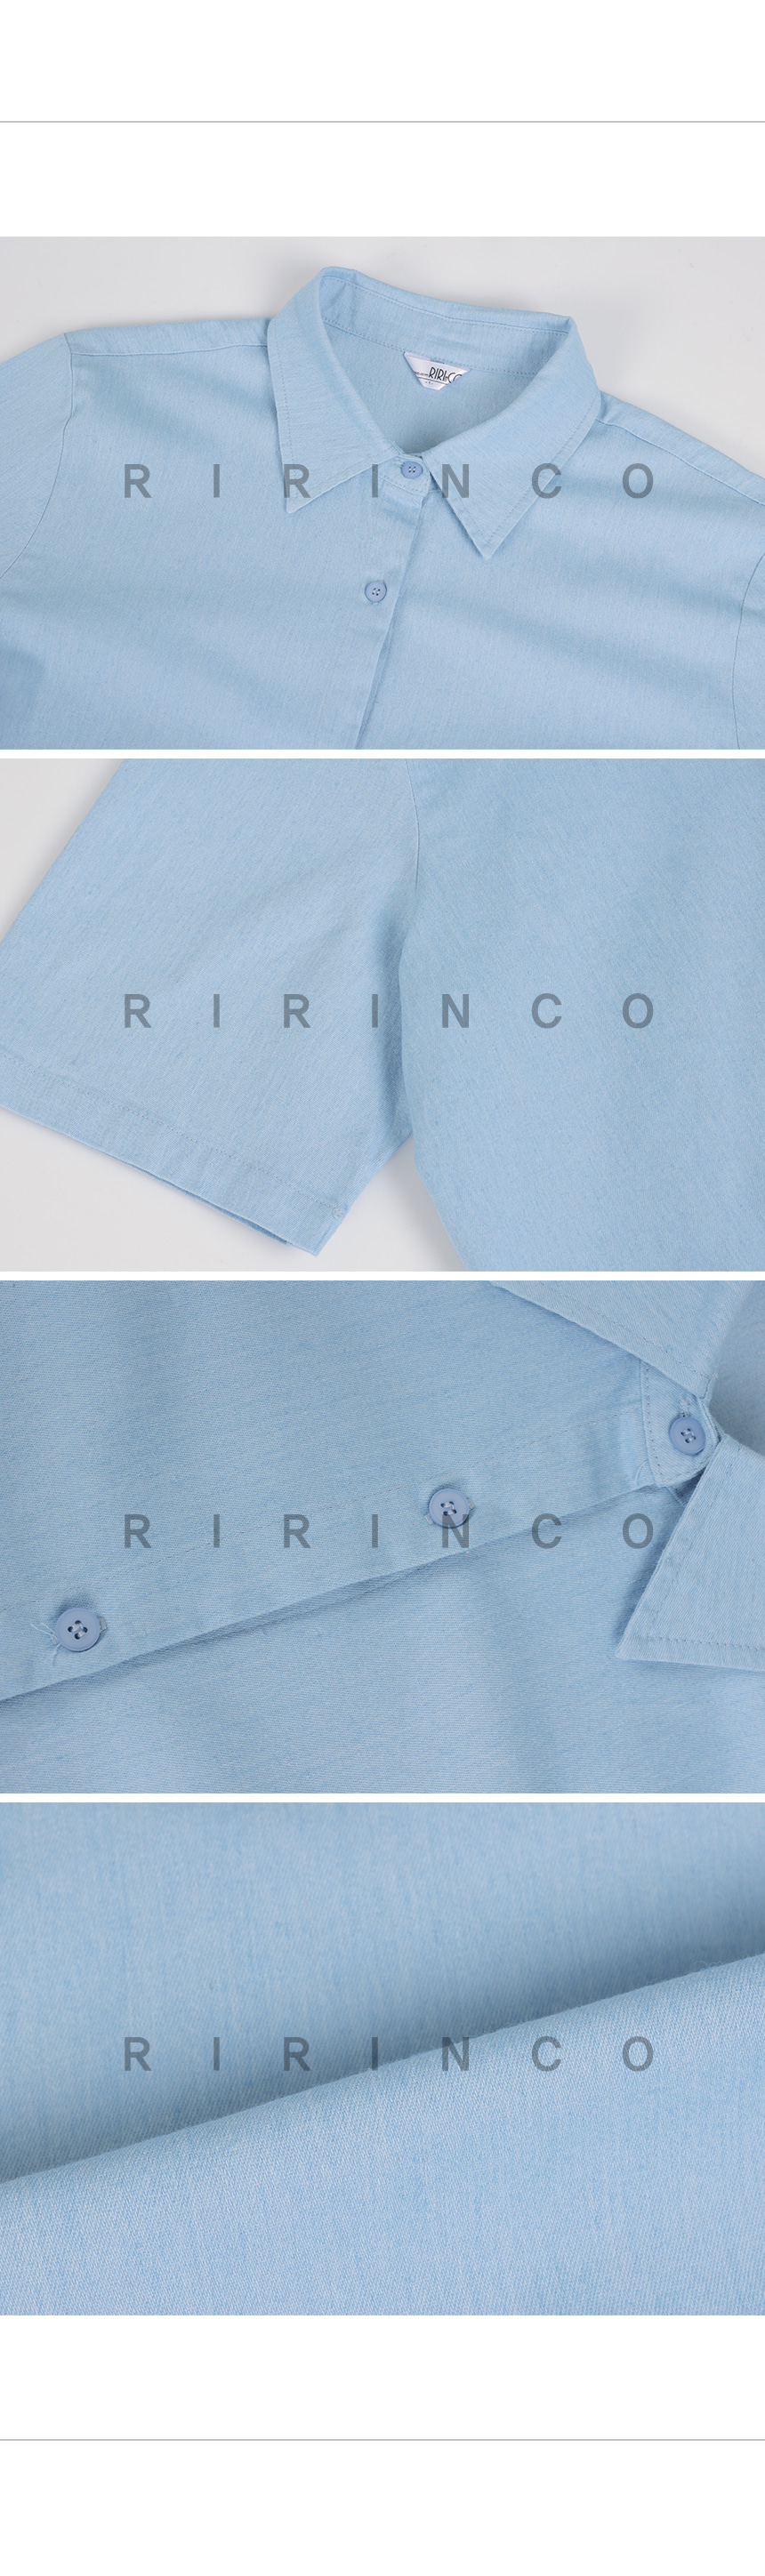 RIRINCO [カップル/ペアルック] デニムルーズフィットシャツ